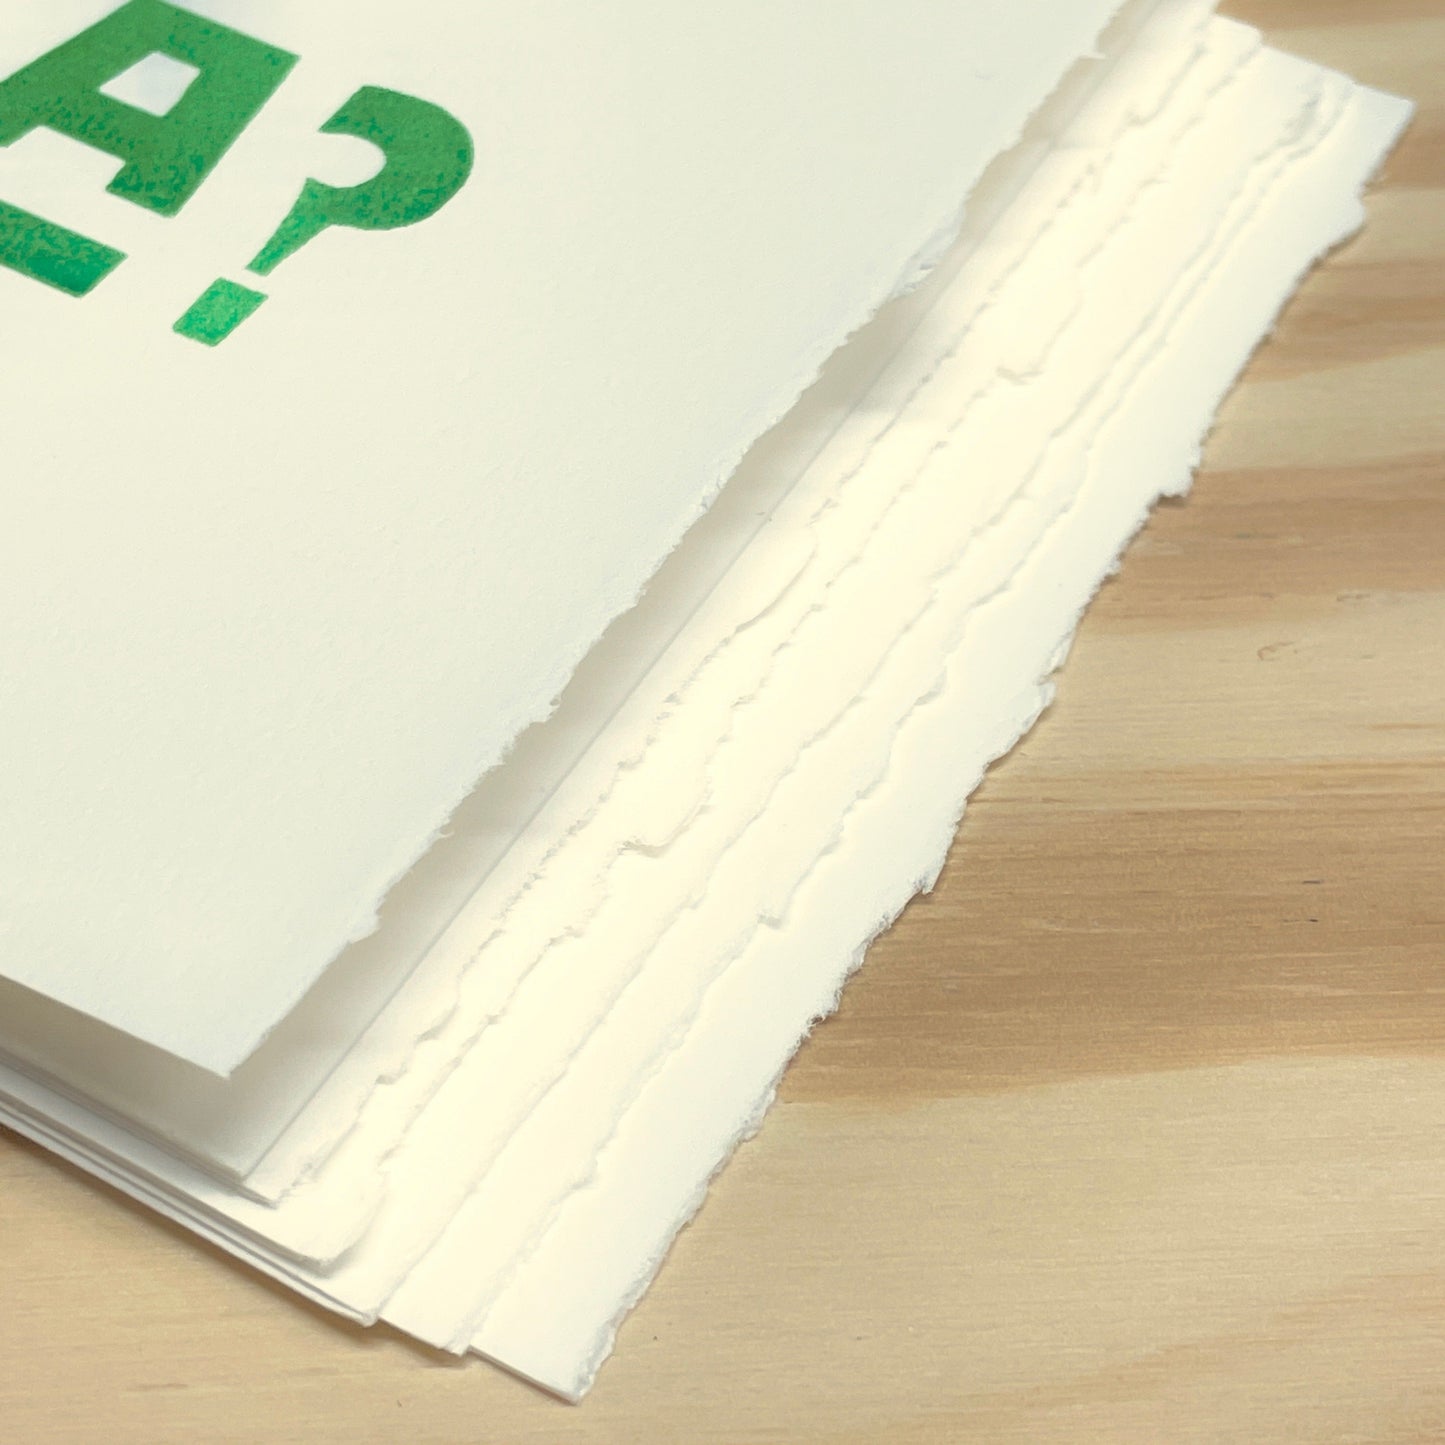 Fika? 6-pack cards - wood type letterpress printed